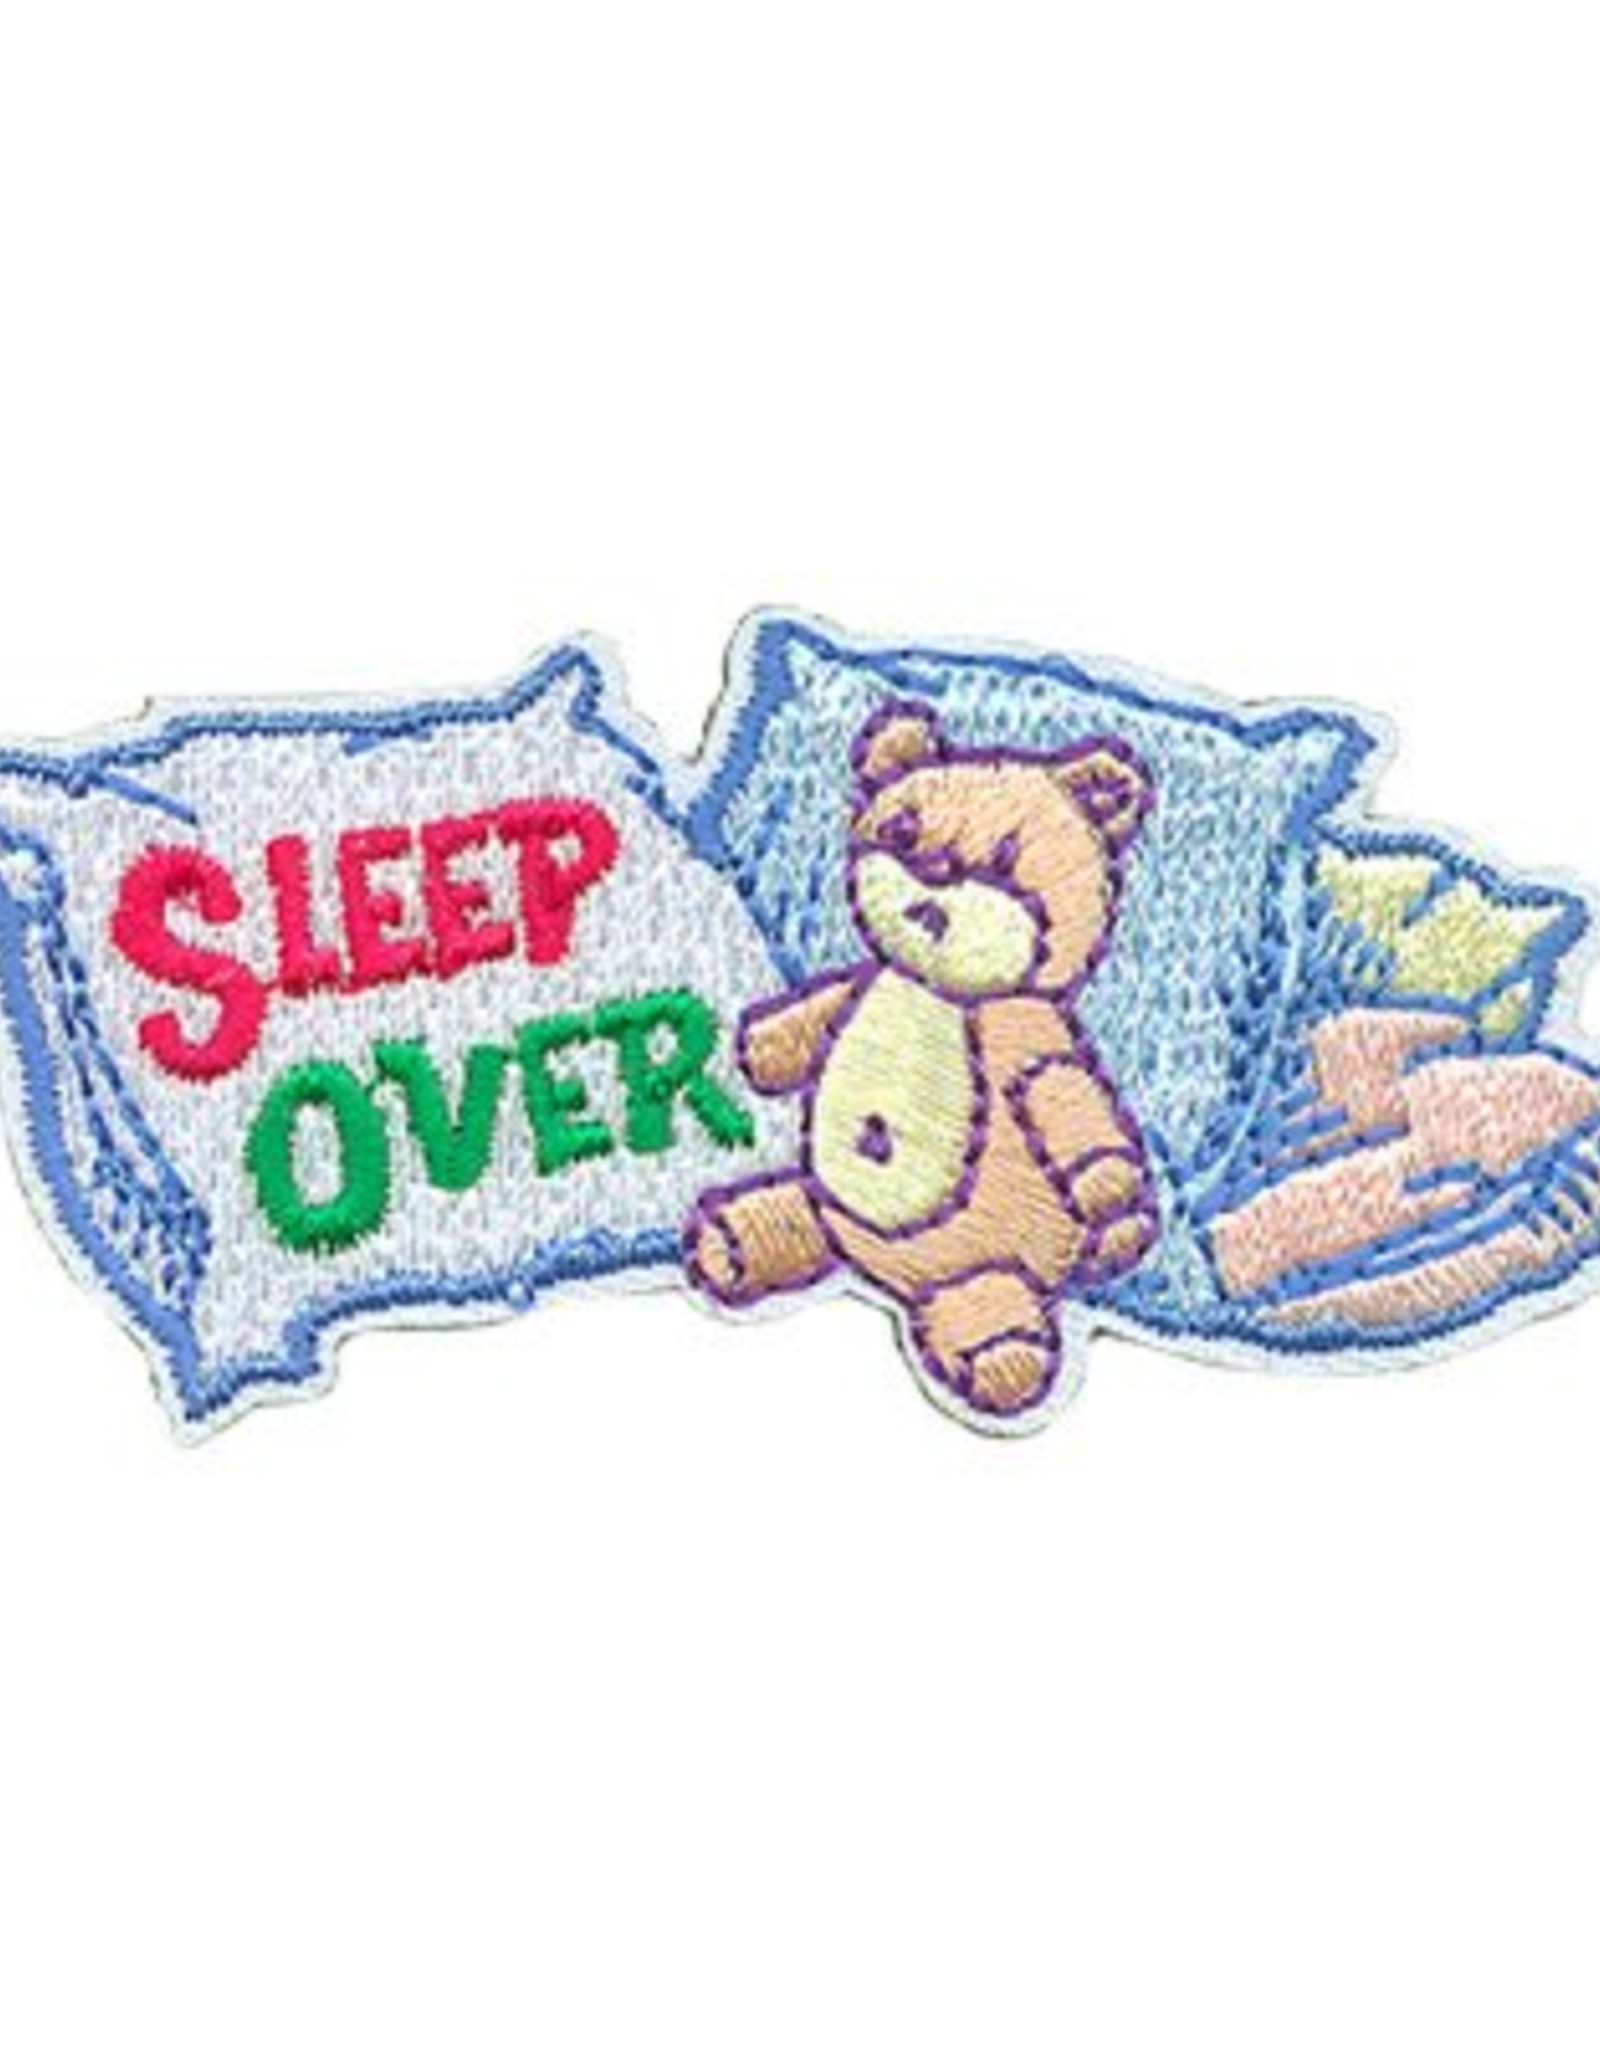 Advantage Emblem & Screen Prnt Sleep Over Teddy Bed Fun Patch